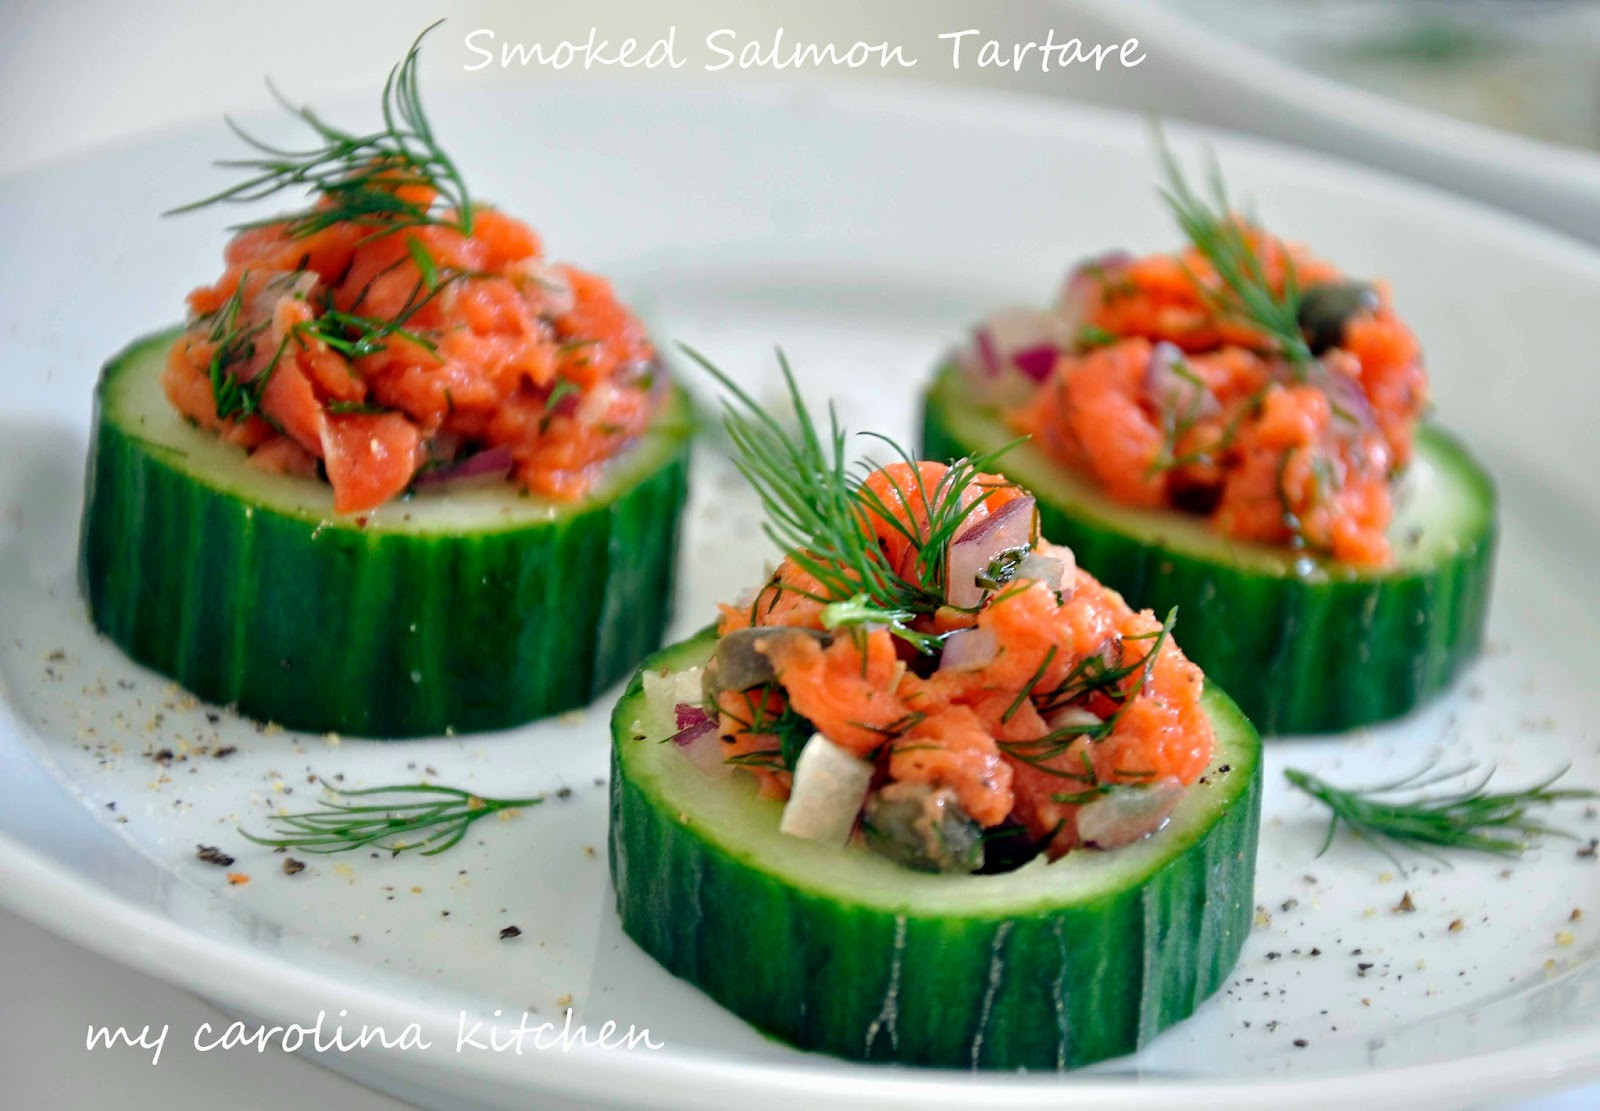 Smoked Salmon Dinner Recipe
 My Carolina Kitchen Smoked Salmon Tartare on Cucumber